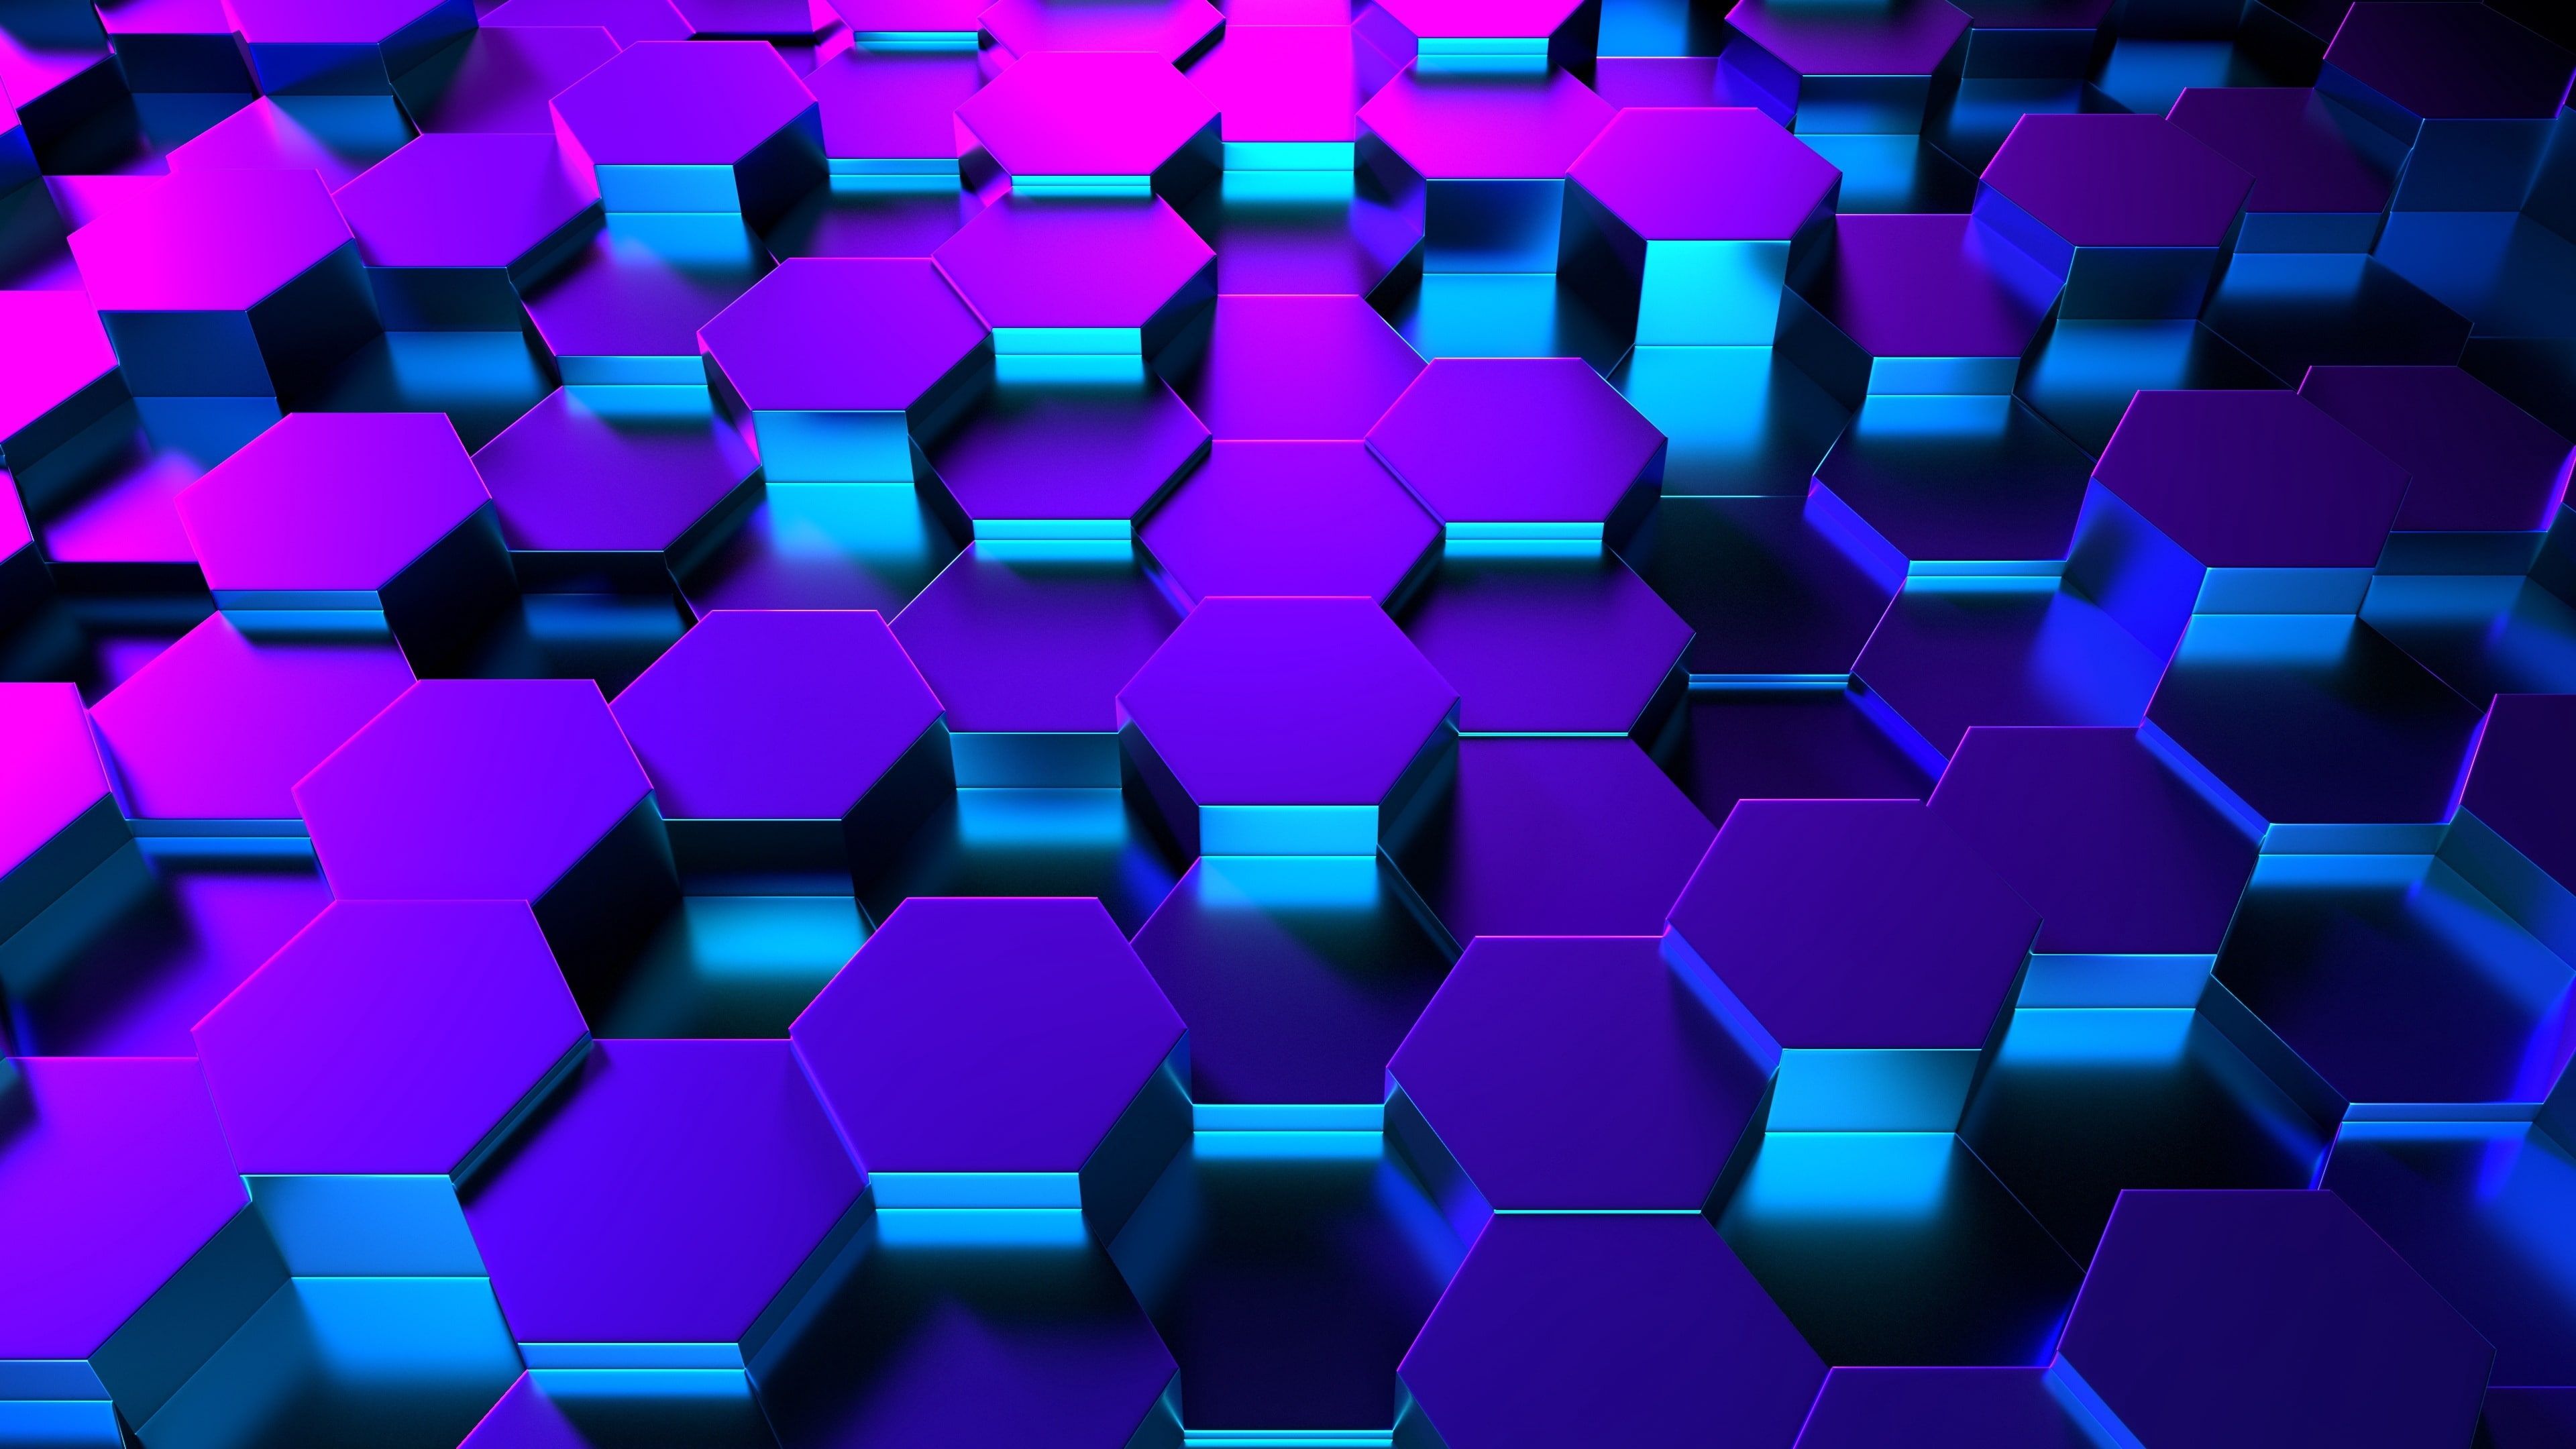 blue #purple #violet #pattern #symmetry #hexagon #honeycomb #design d digital art #light K #wallpaper #hdwallpa. Hexagon wallpaper, Hexagon, Purple wallpaper